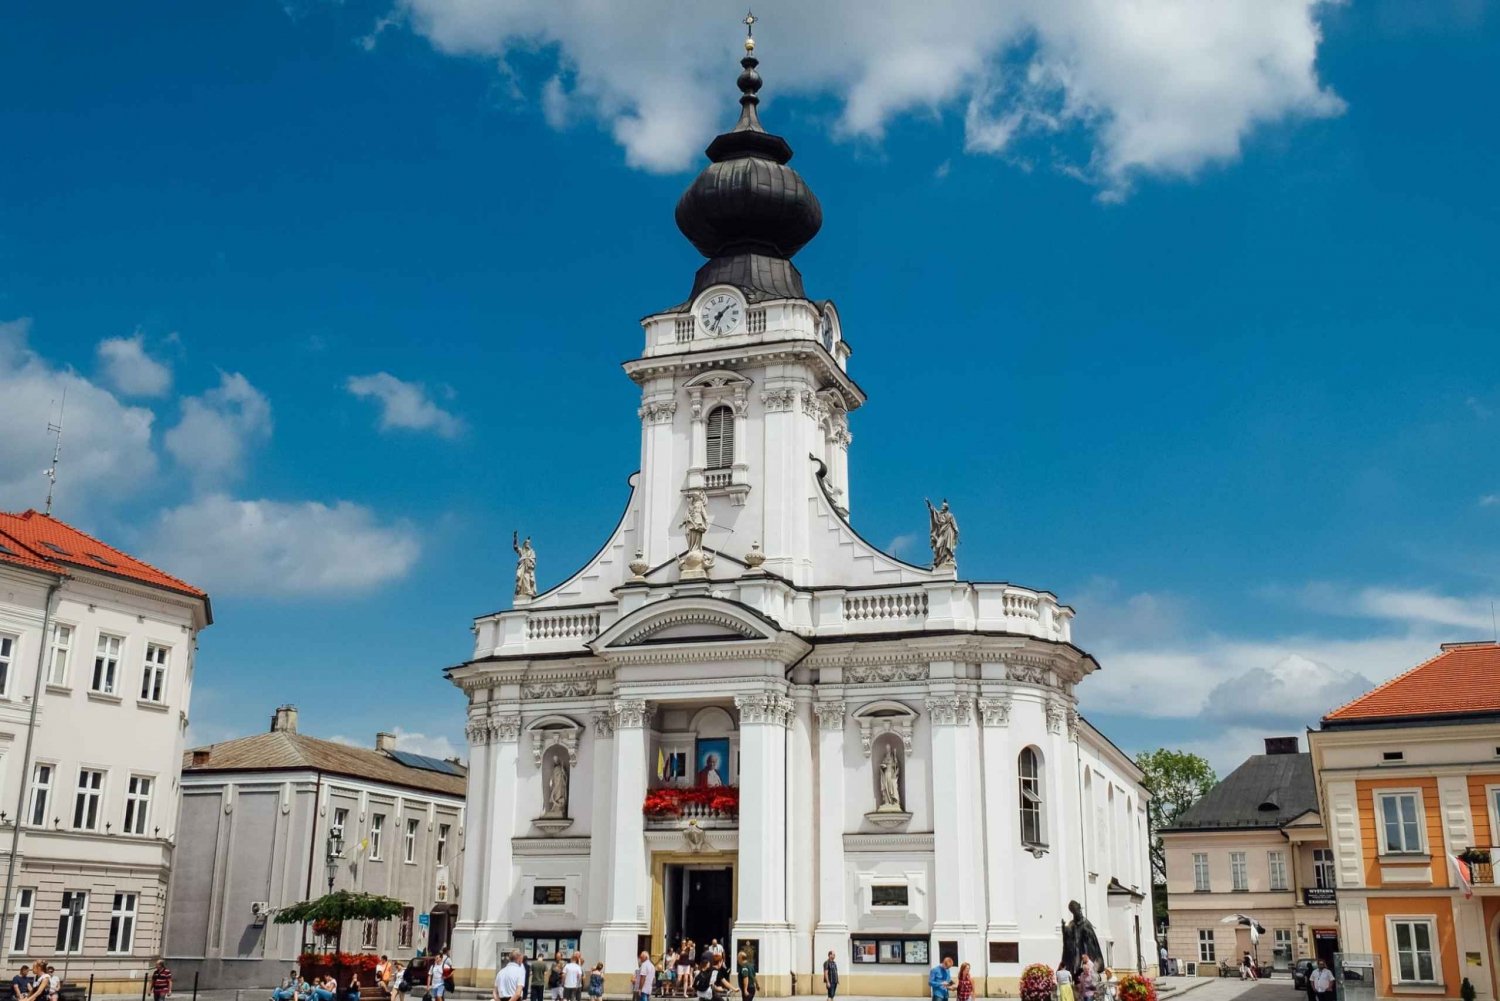 From Krakow: Jasna Góra Monastery & Home of John Paul II